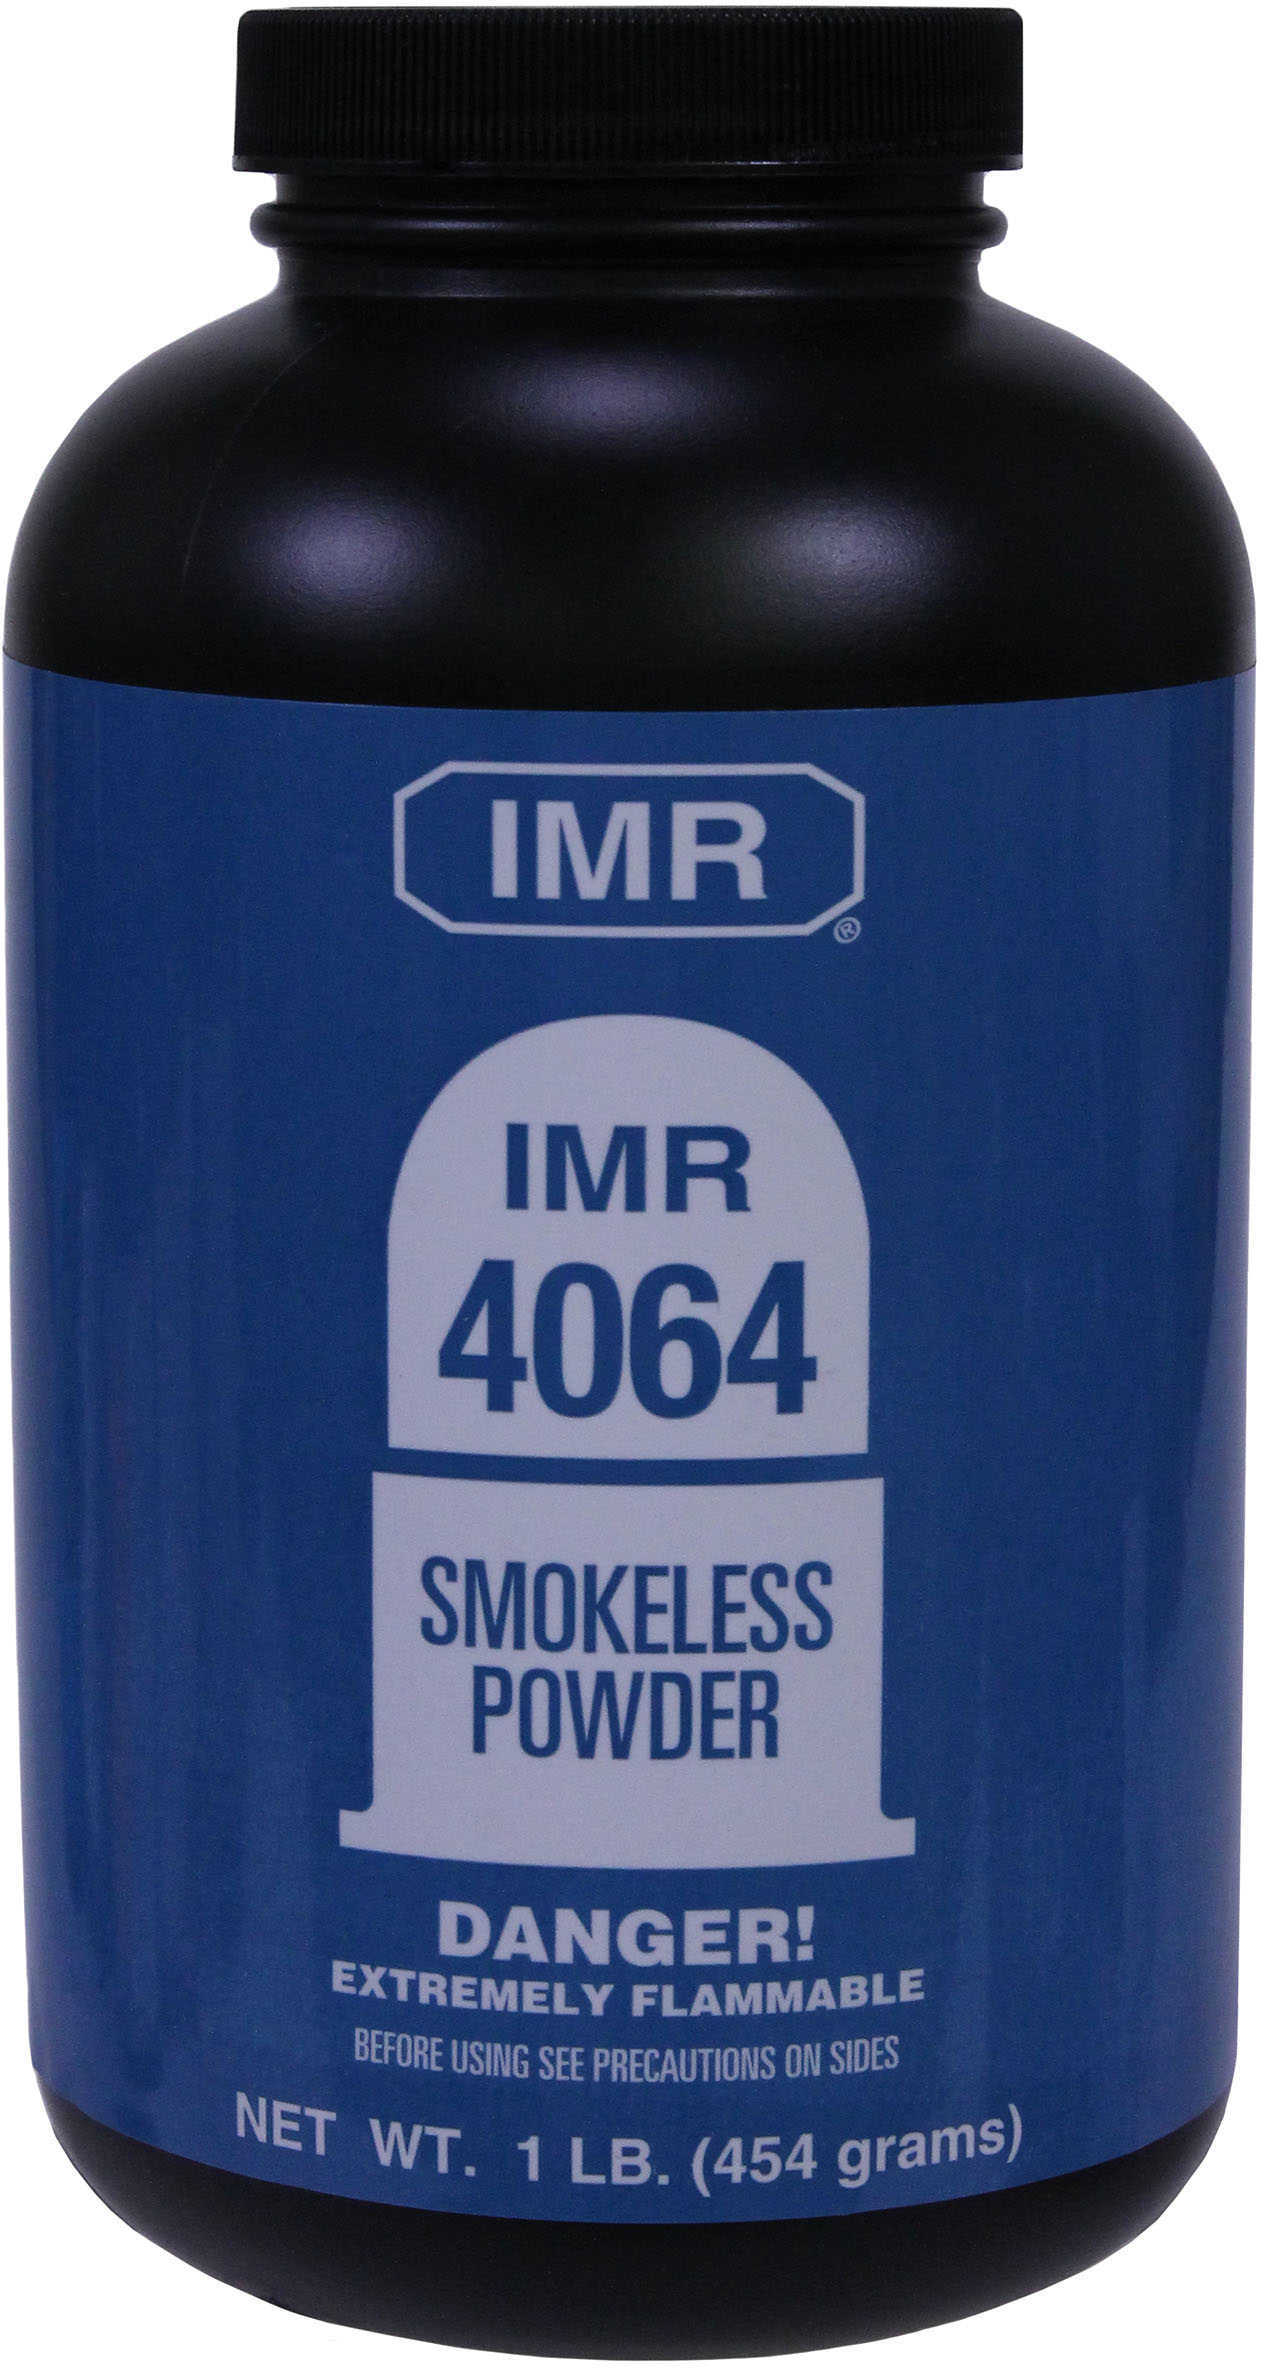 IMR Smokeless Powder 4064 1 Lb Reloading